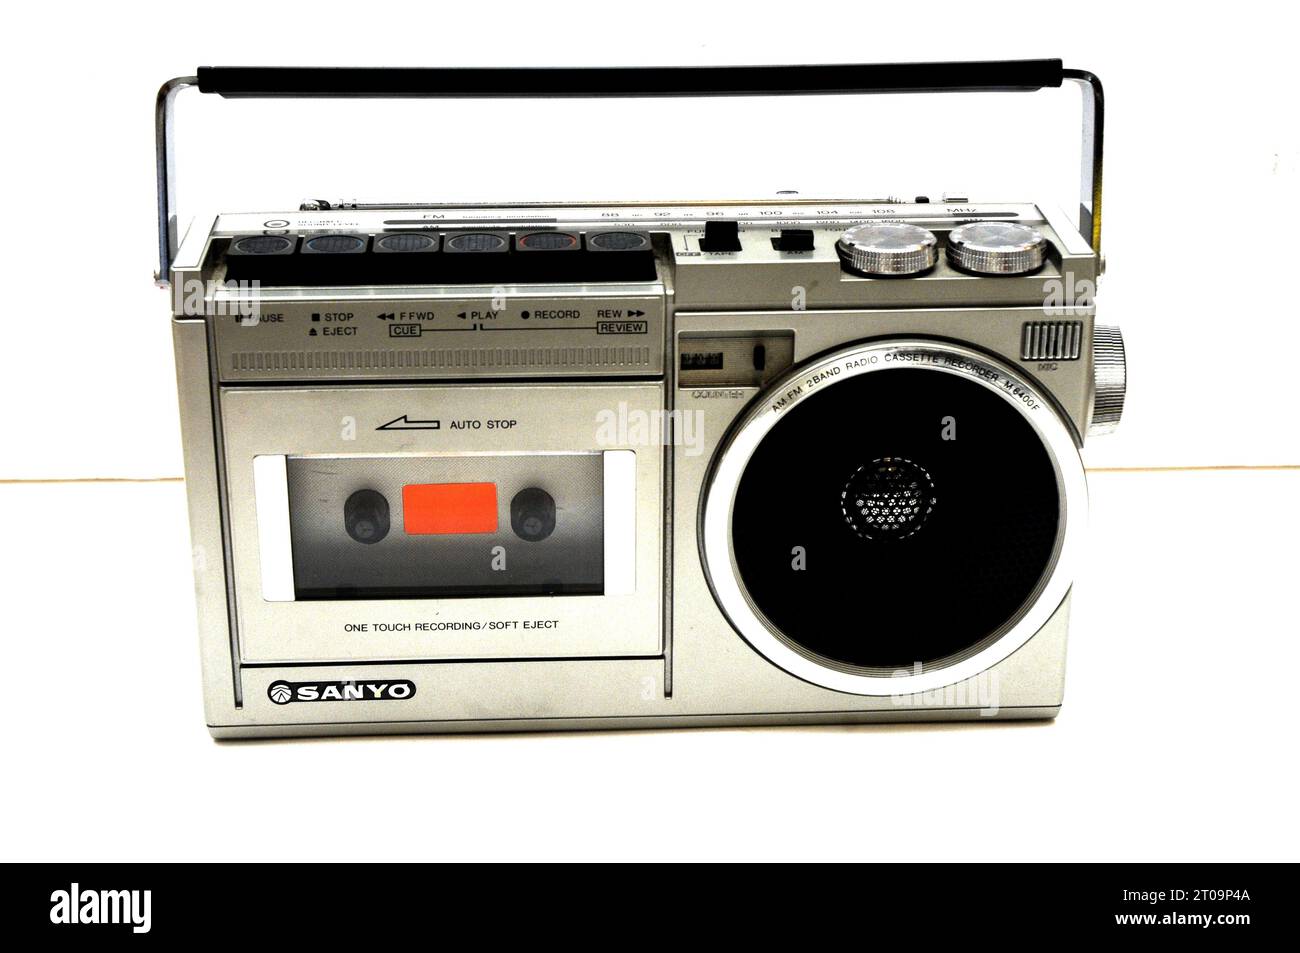 sanyo; Kassette; 70er Jahre; Musikgerät; 70er Jahre Musikplayer; Band; Kassette; Sanyo Radiokassette; Vintage Radiokassette Stockfoto